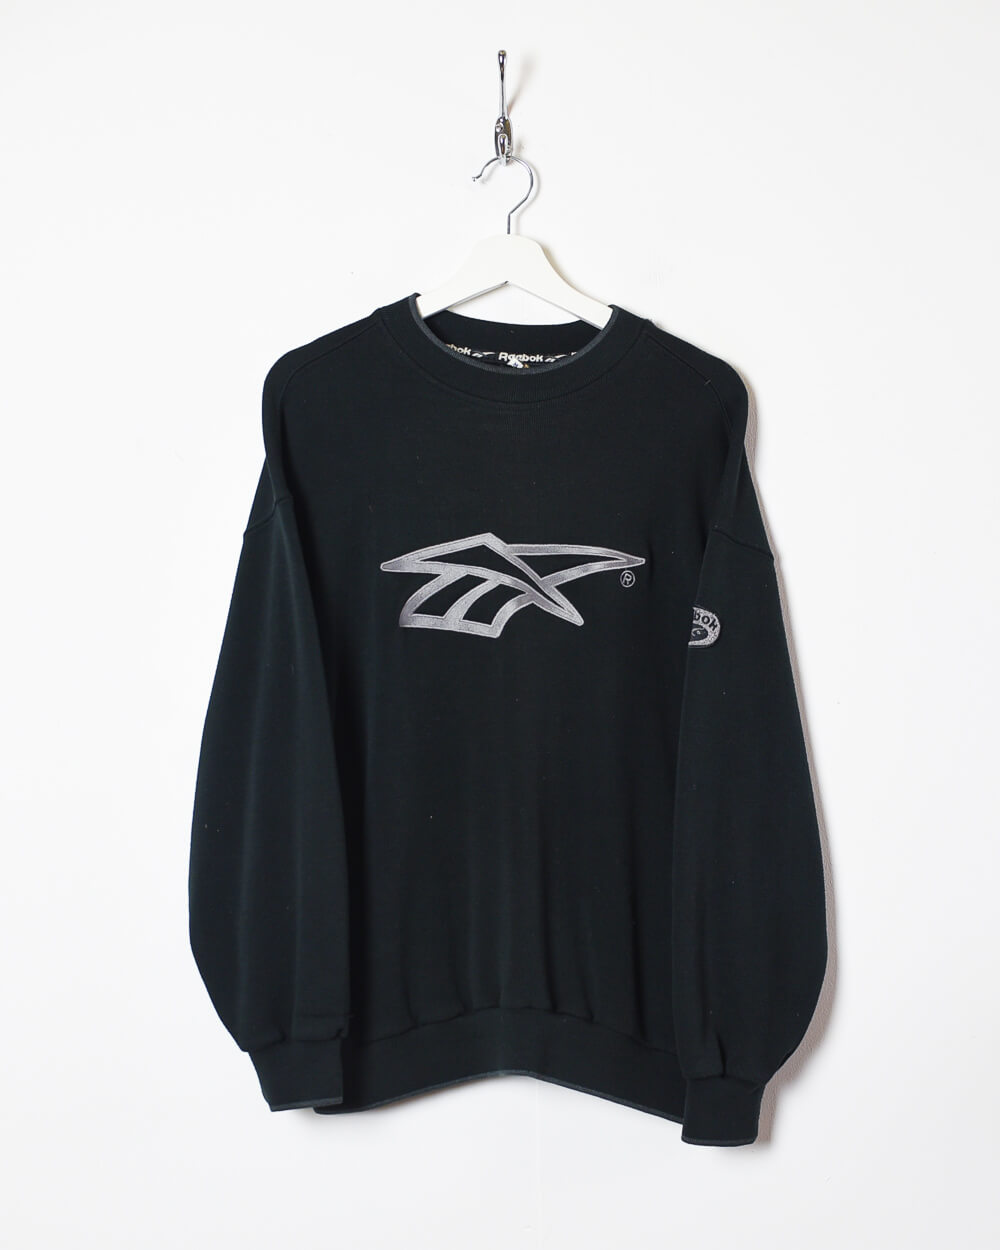 Black Reebok Sweatshirt - Small